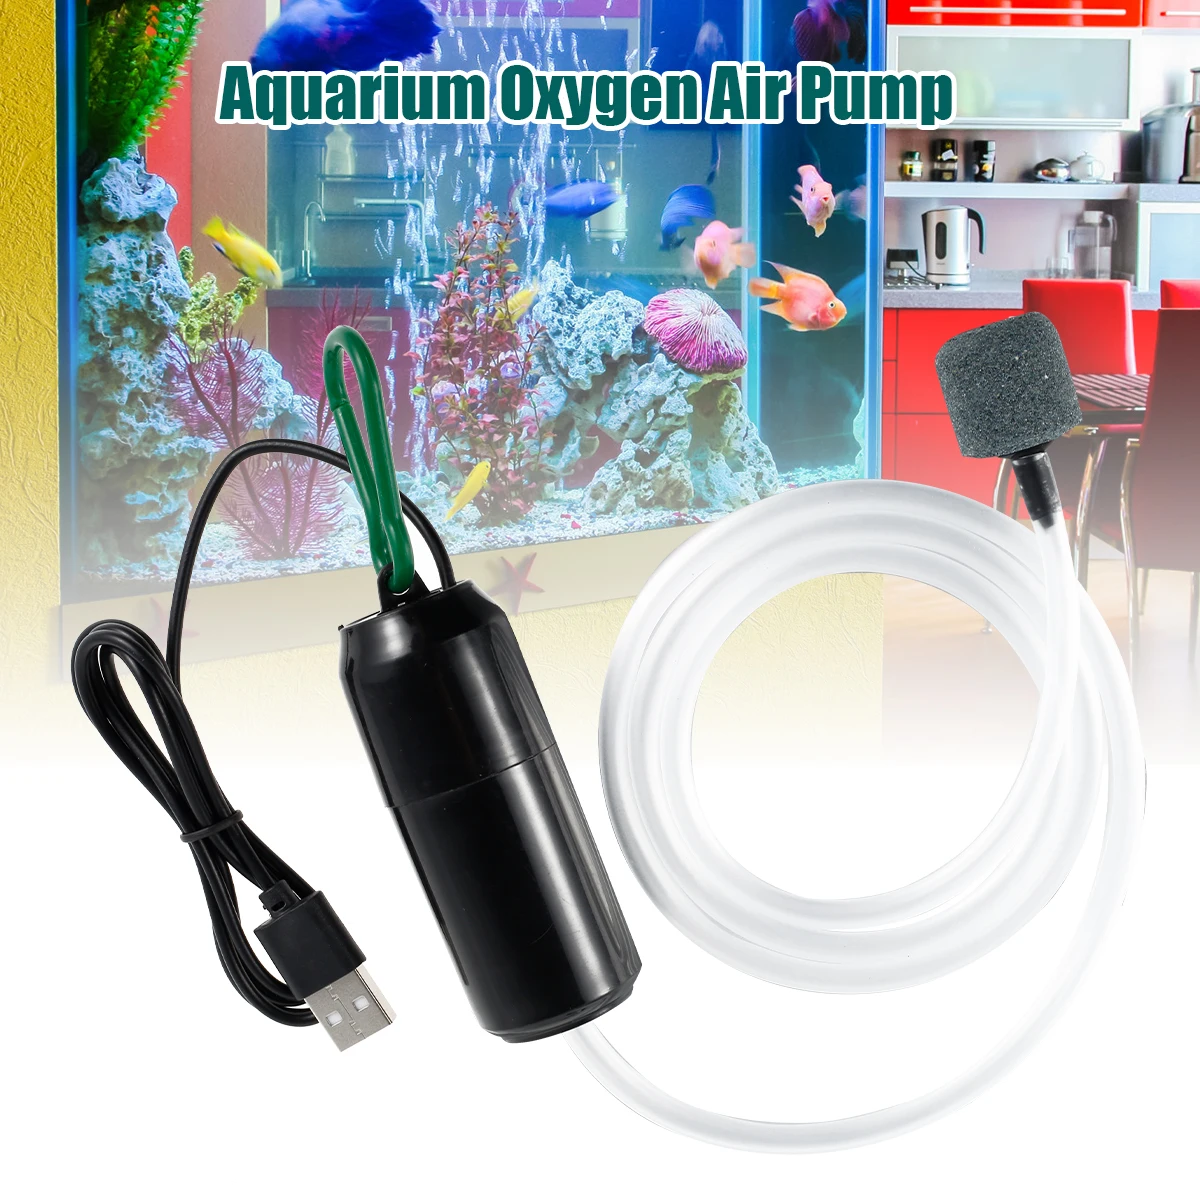 

USB Powered Oxygen Pump 5V 1W Portable Mini Aquarium Fish Tank Air Pump Oxygen Bubbler with Air Stone